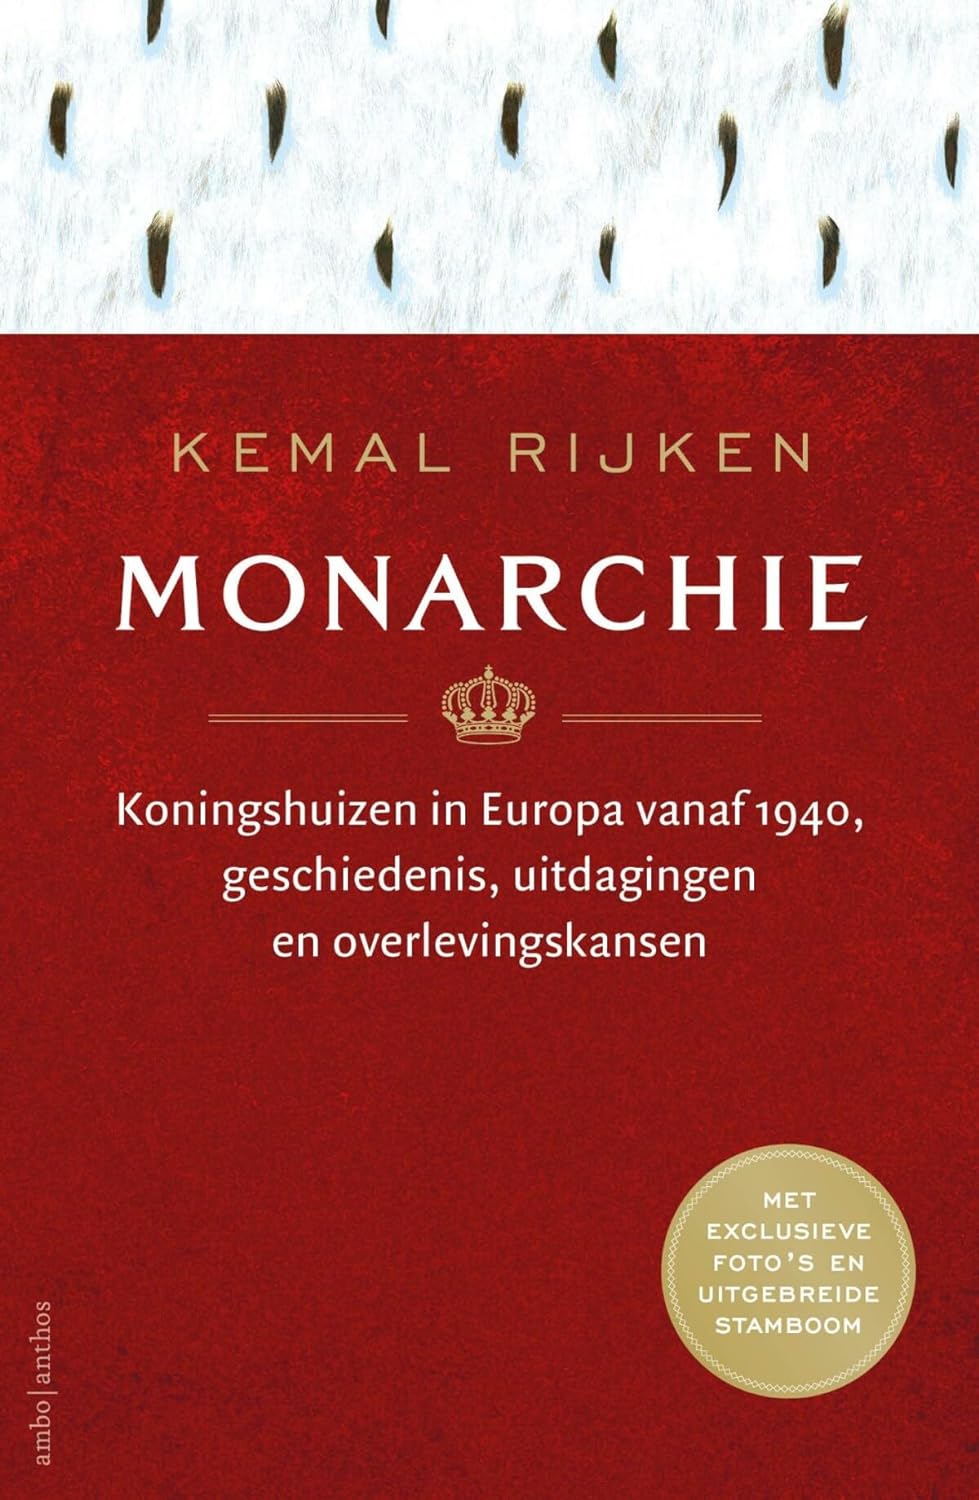 01 Rijke Monarchie